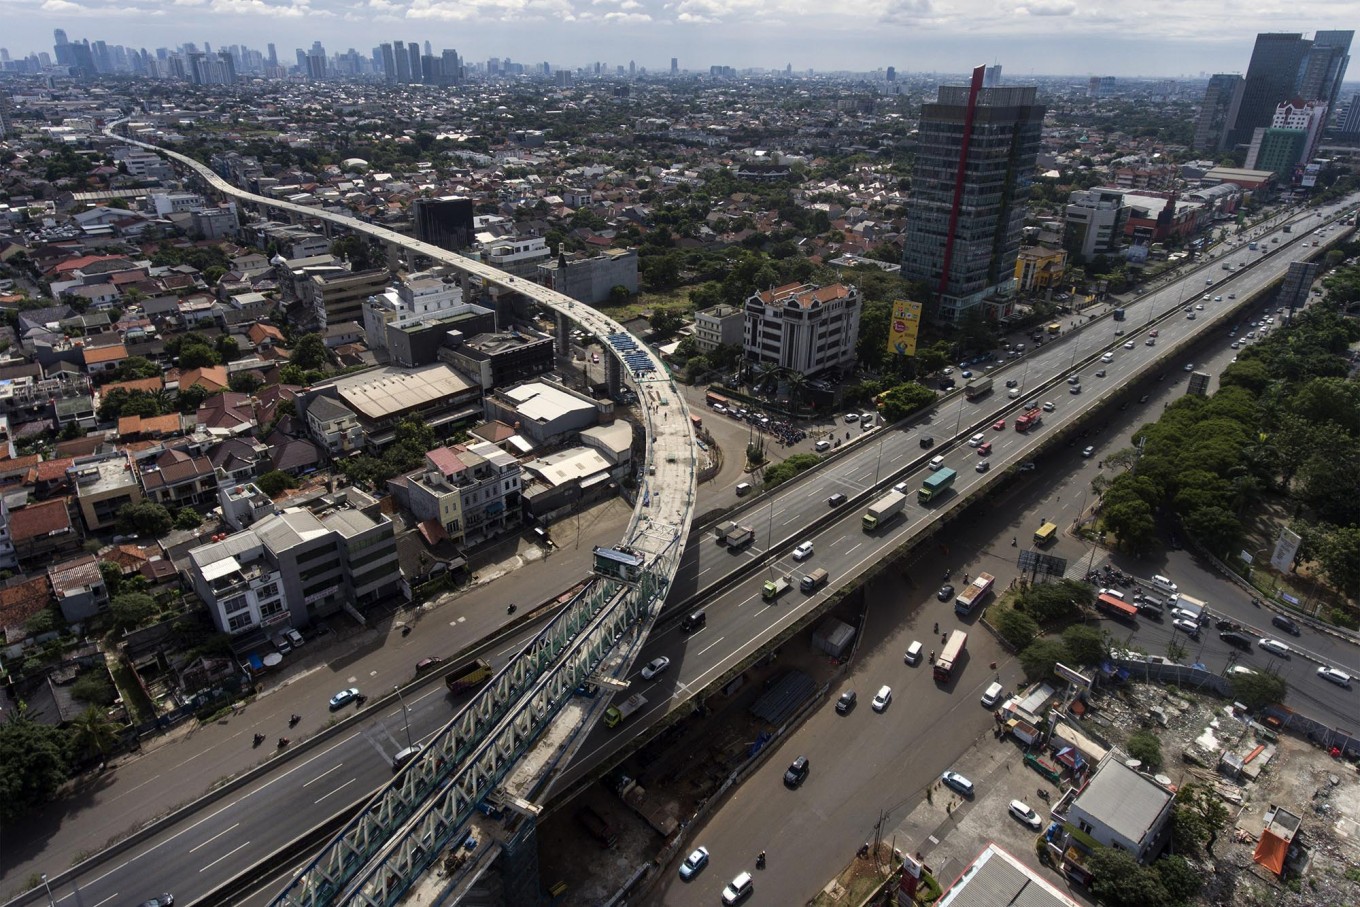 MRT Jakarta upbeat about timeline despite land dispute - City - The